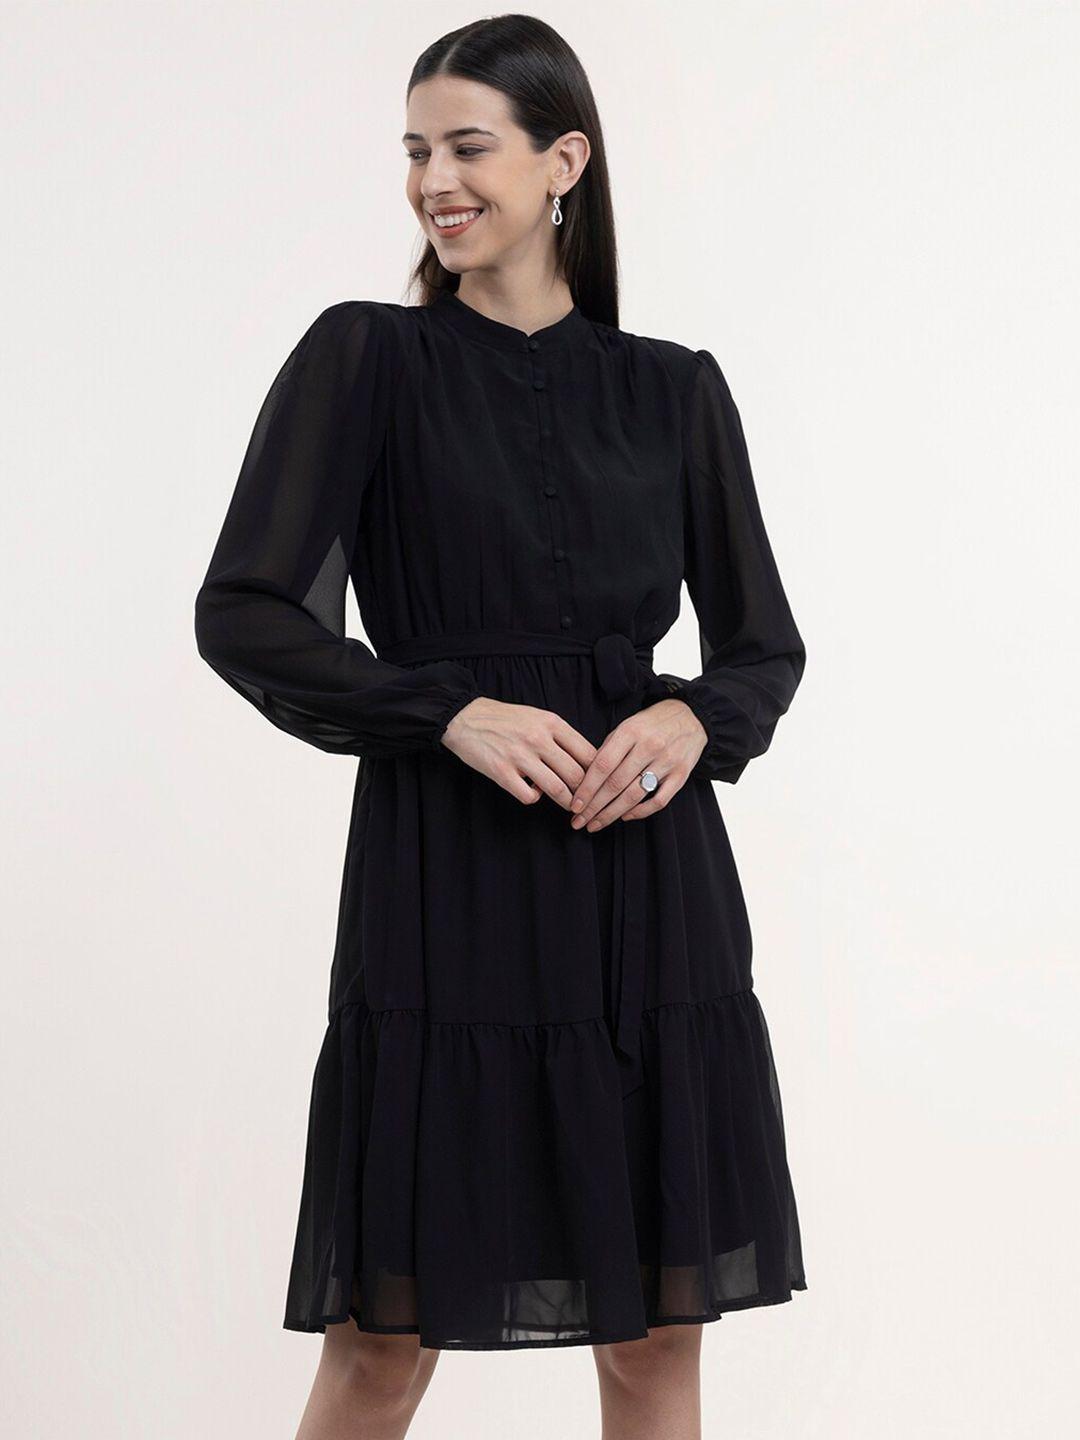 fablestreet black formal dress